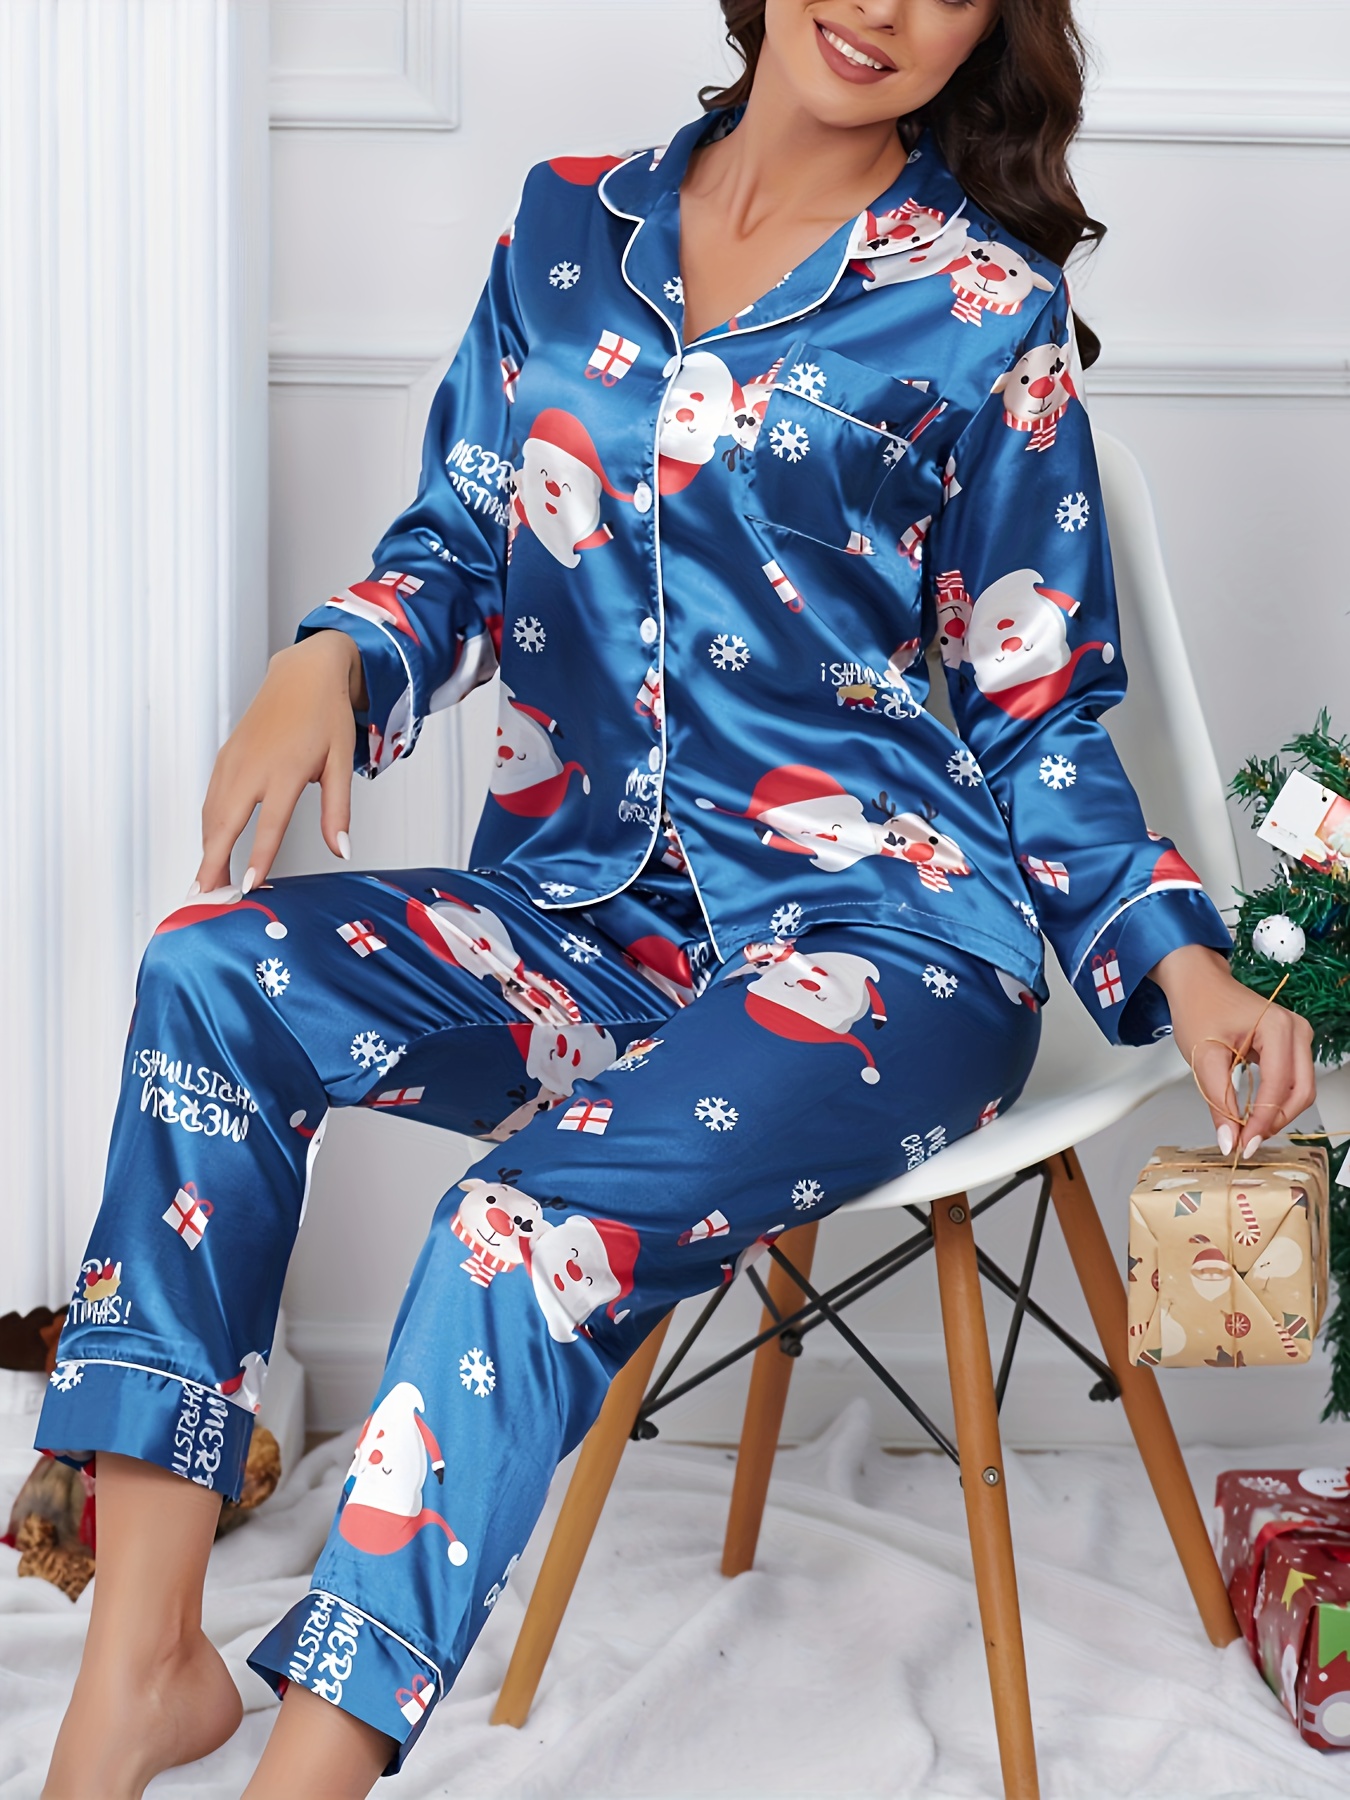  Family Christmas Pajamas Sets For Women,Women's Fashion  Loungewear 2 Pieces Xmas Print Sleepwear Pjs Set Blue : Sports & Outdoors